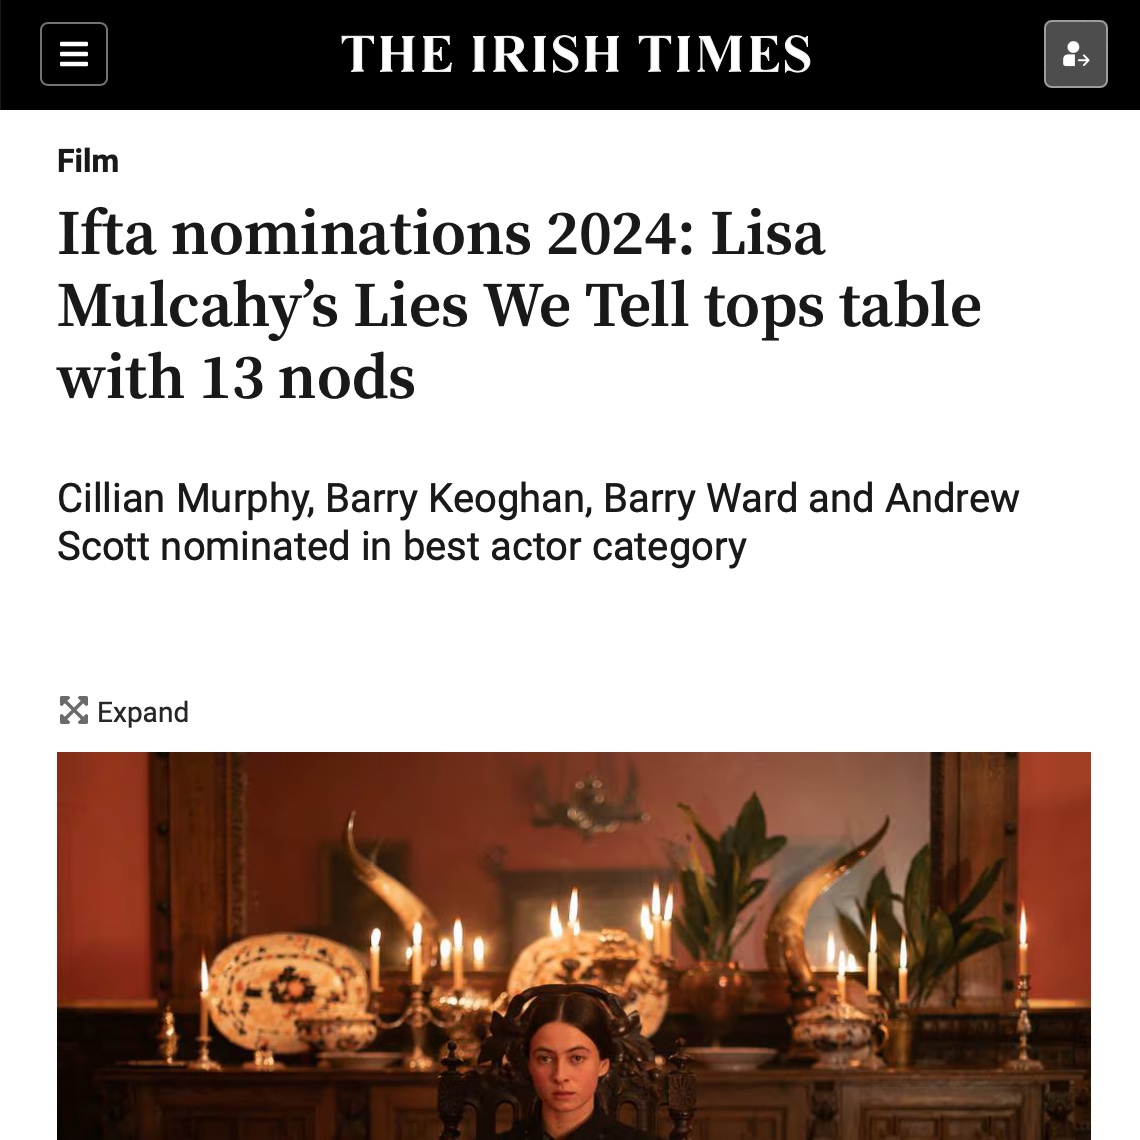 From @IrishTimes: IFTA nominations 2024: Lisa Mulcahy’s Lies We Tell tops table with 13 nods irishtimes.com/culture/film/2… @DonaldClarke63